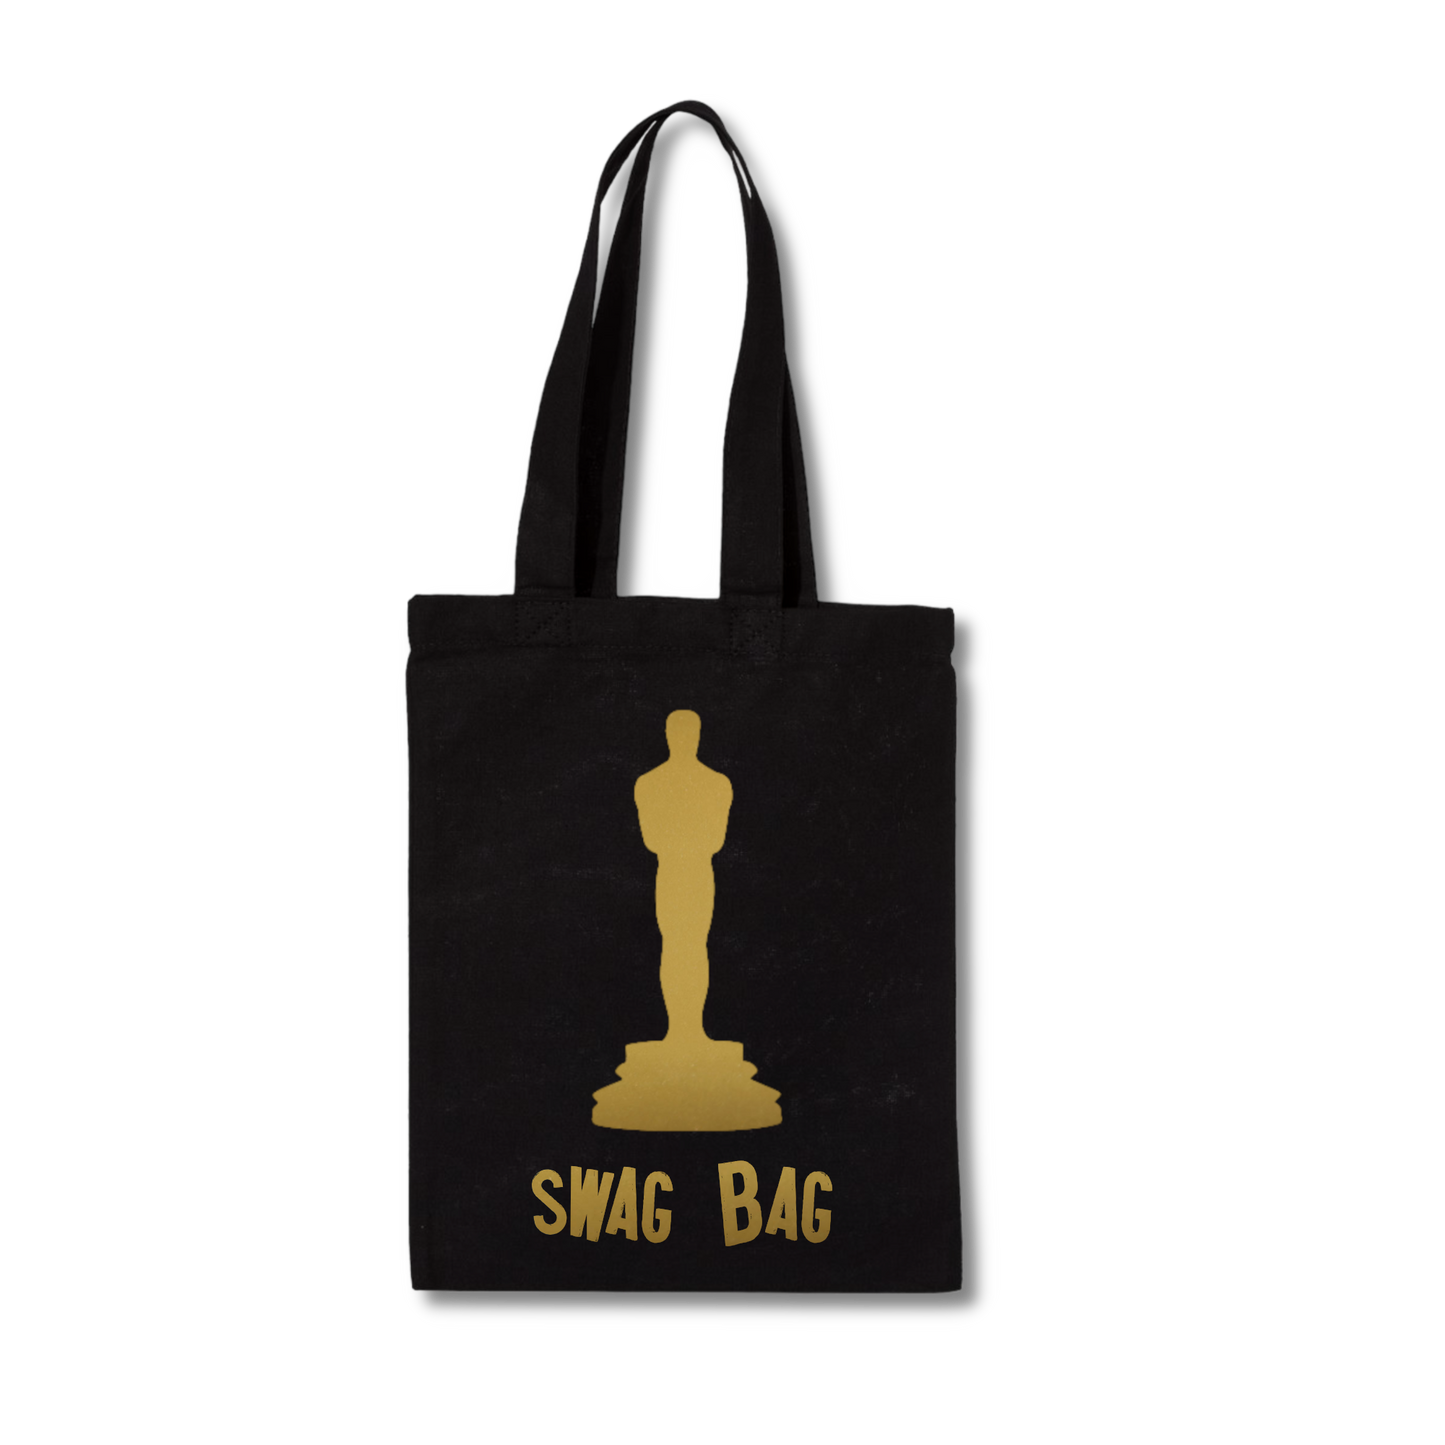 Award Show Party Favor Bags